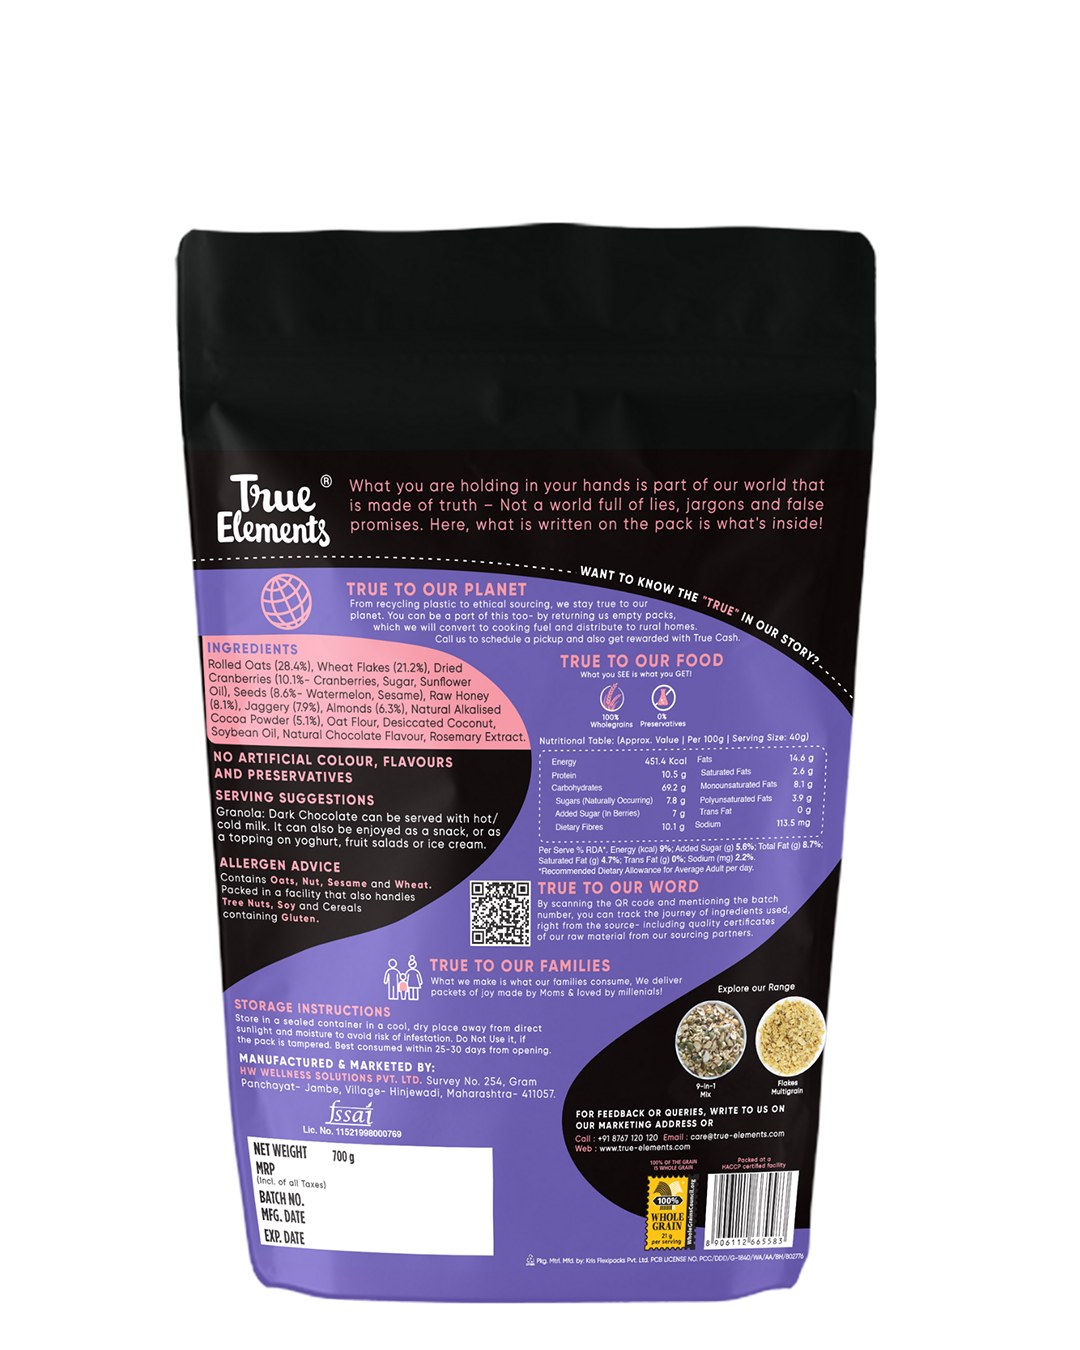 True Elements Dark Chocolate Granola 700gm ingredients and nutritional value